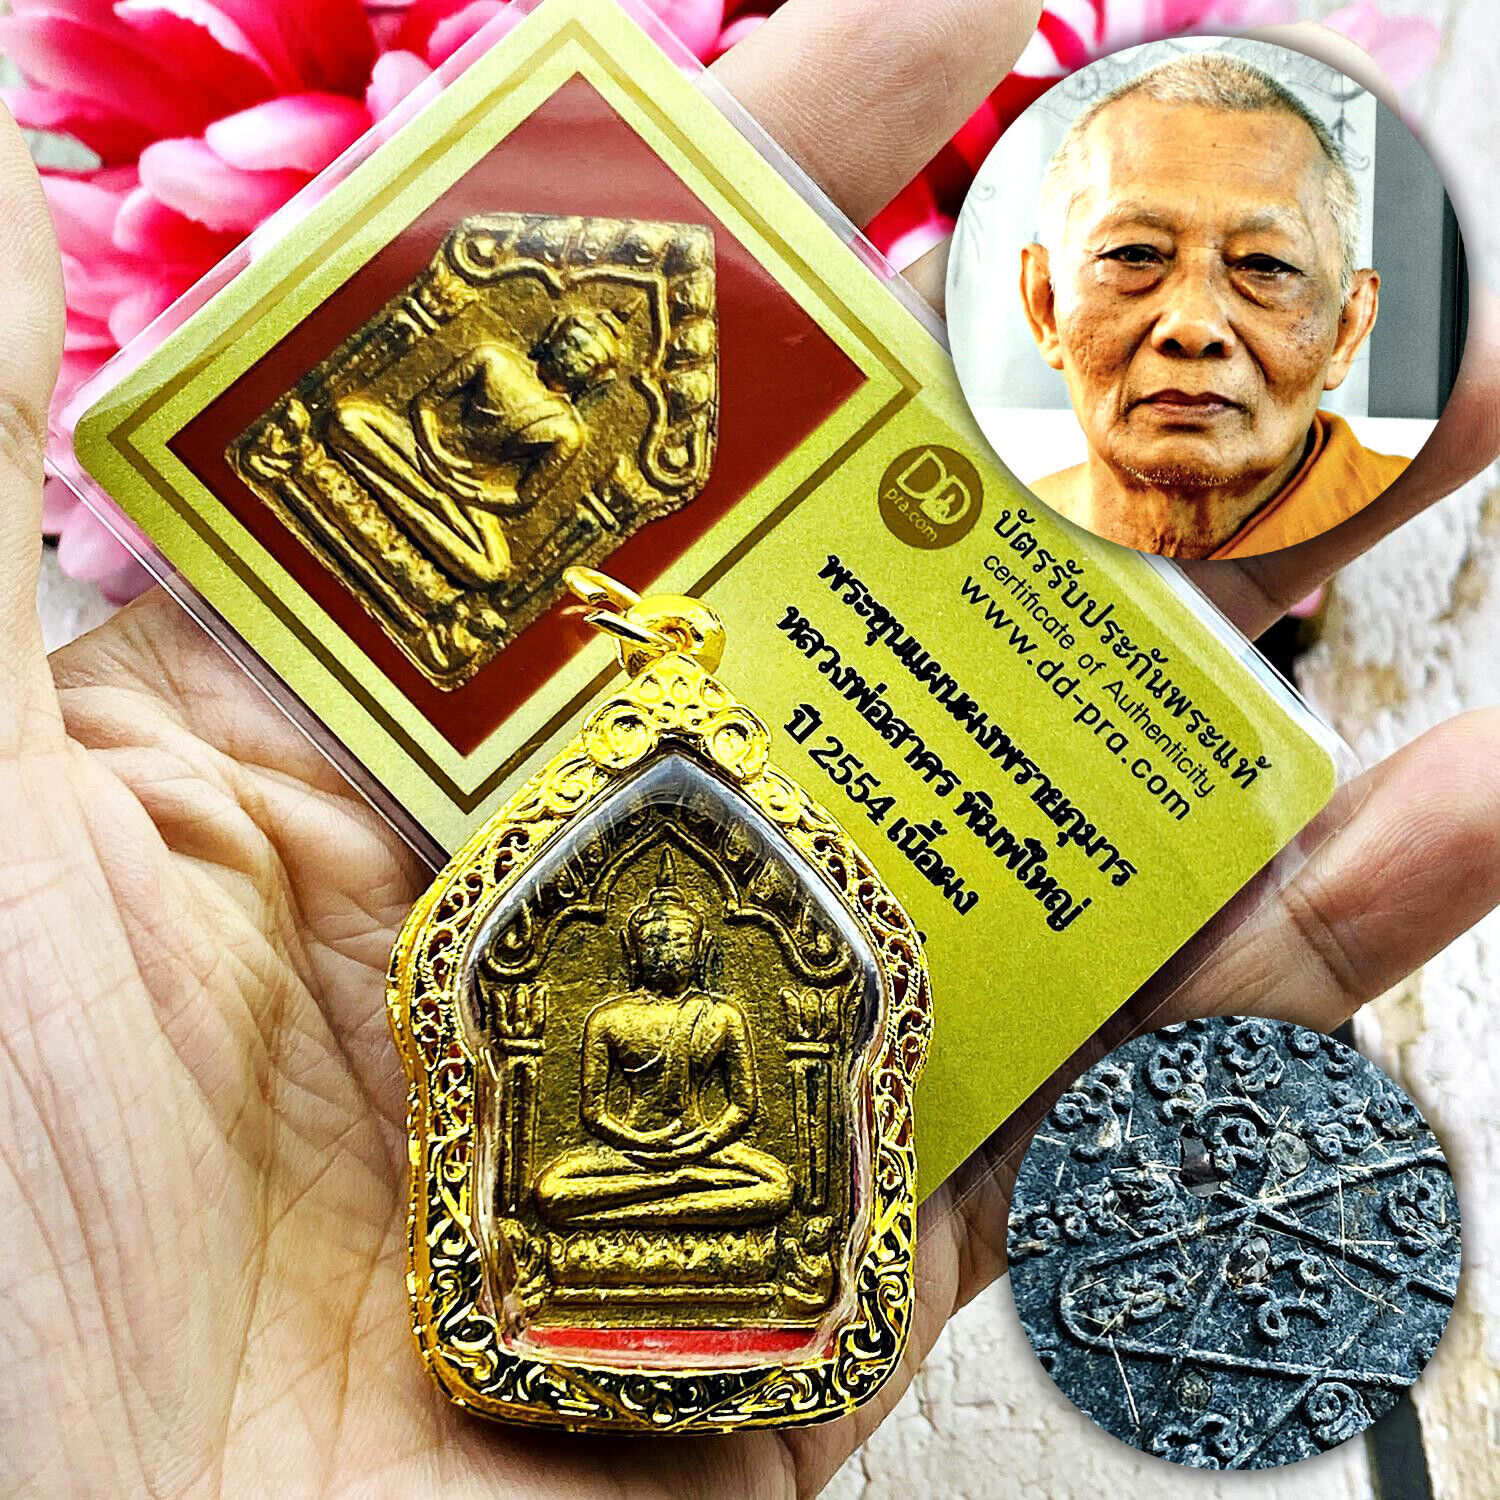 certificate-khunpaen-plai-ash-chumsang-lp-sakorn-be2554-black-thai